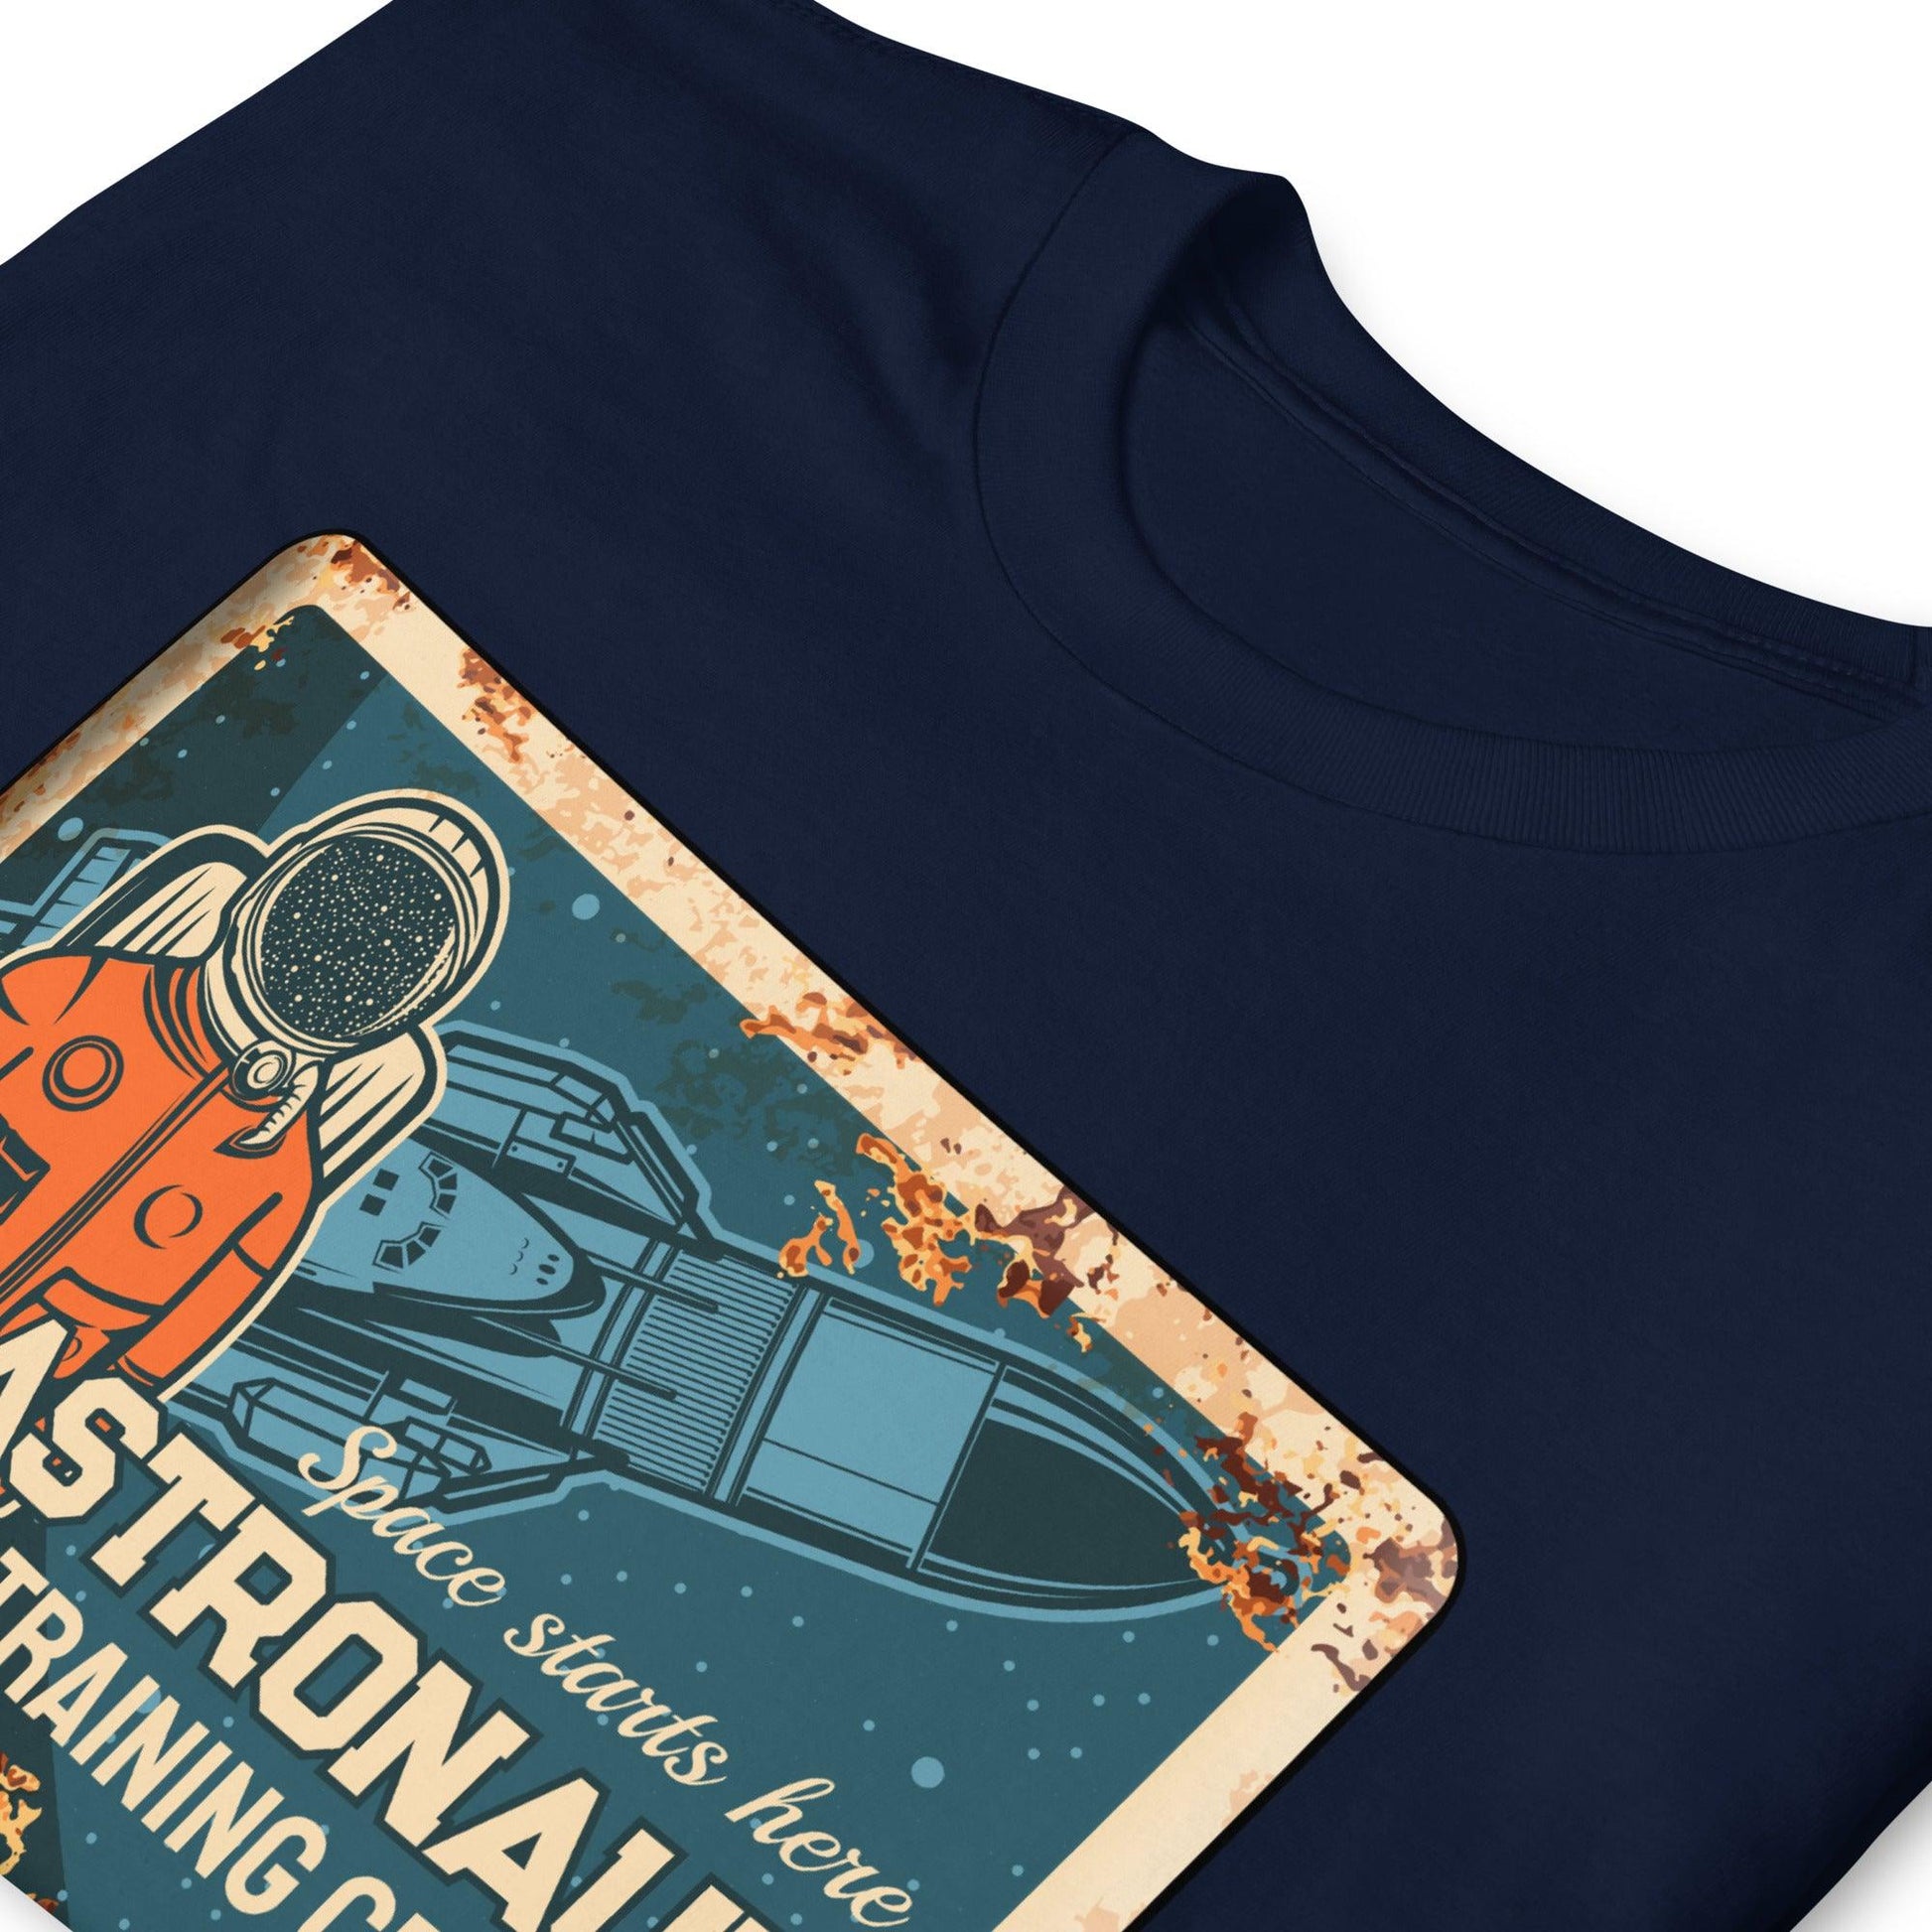 Spaceship & Satellites Rusty Plates 003 - Astro TShirts